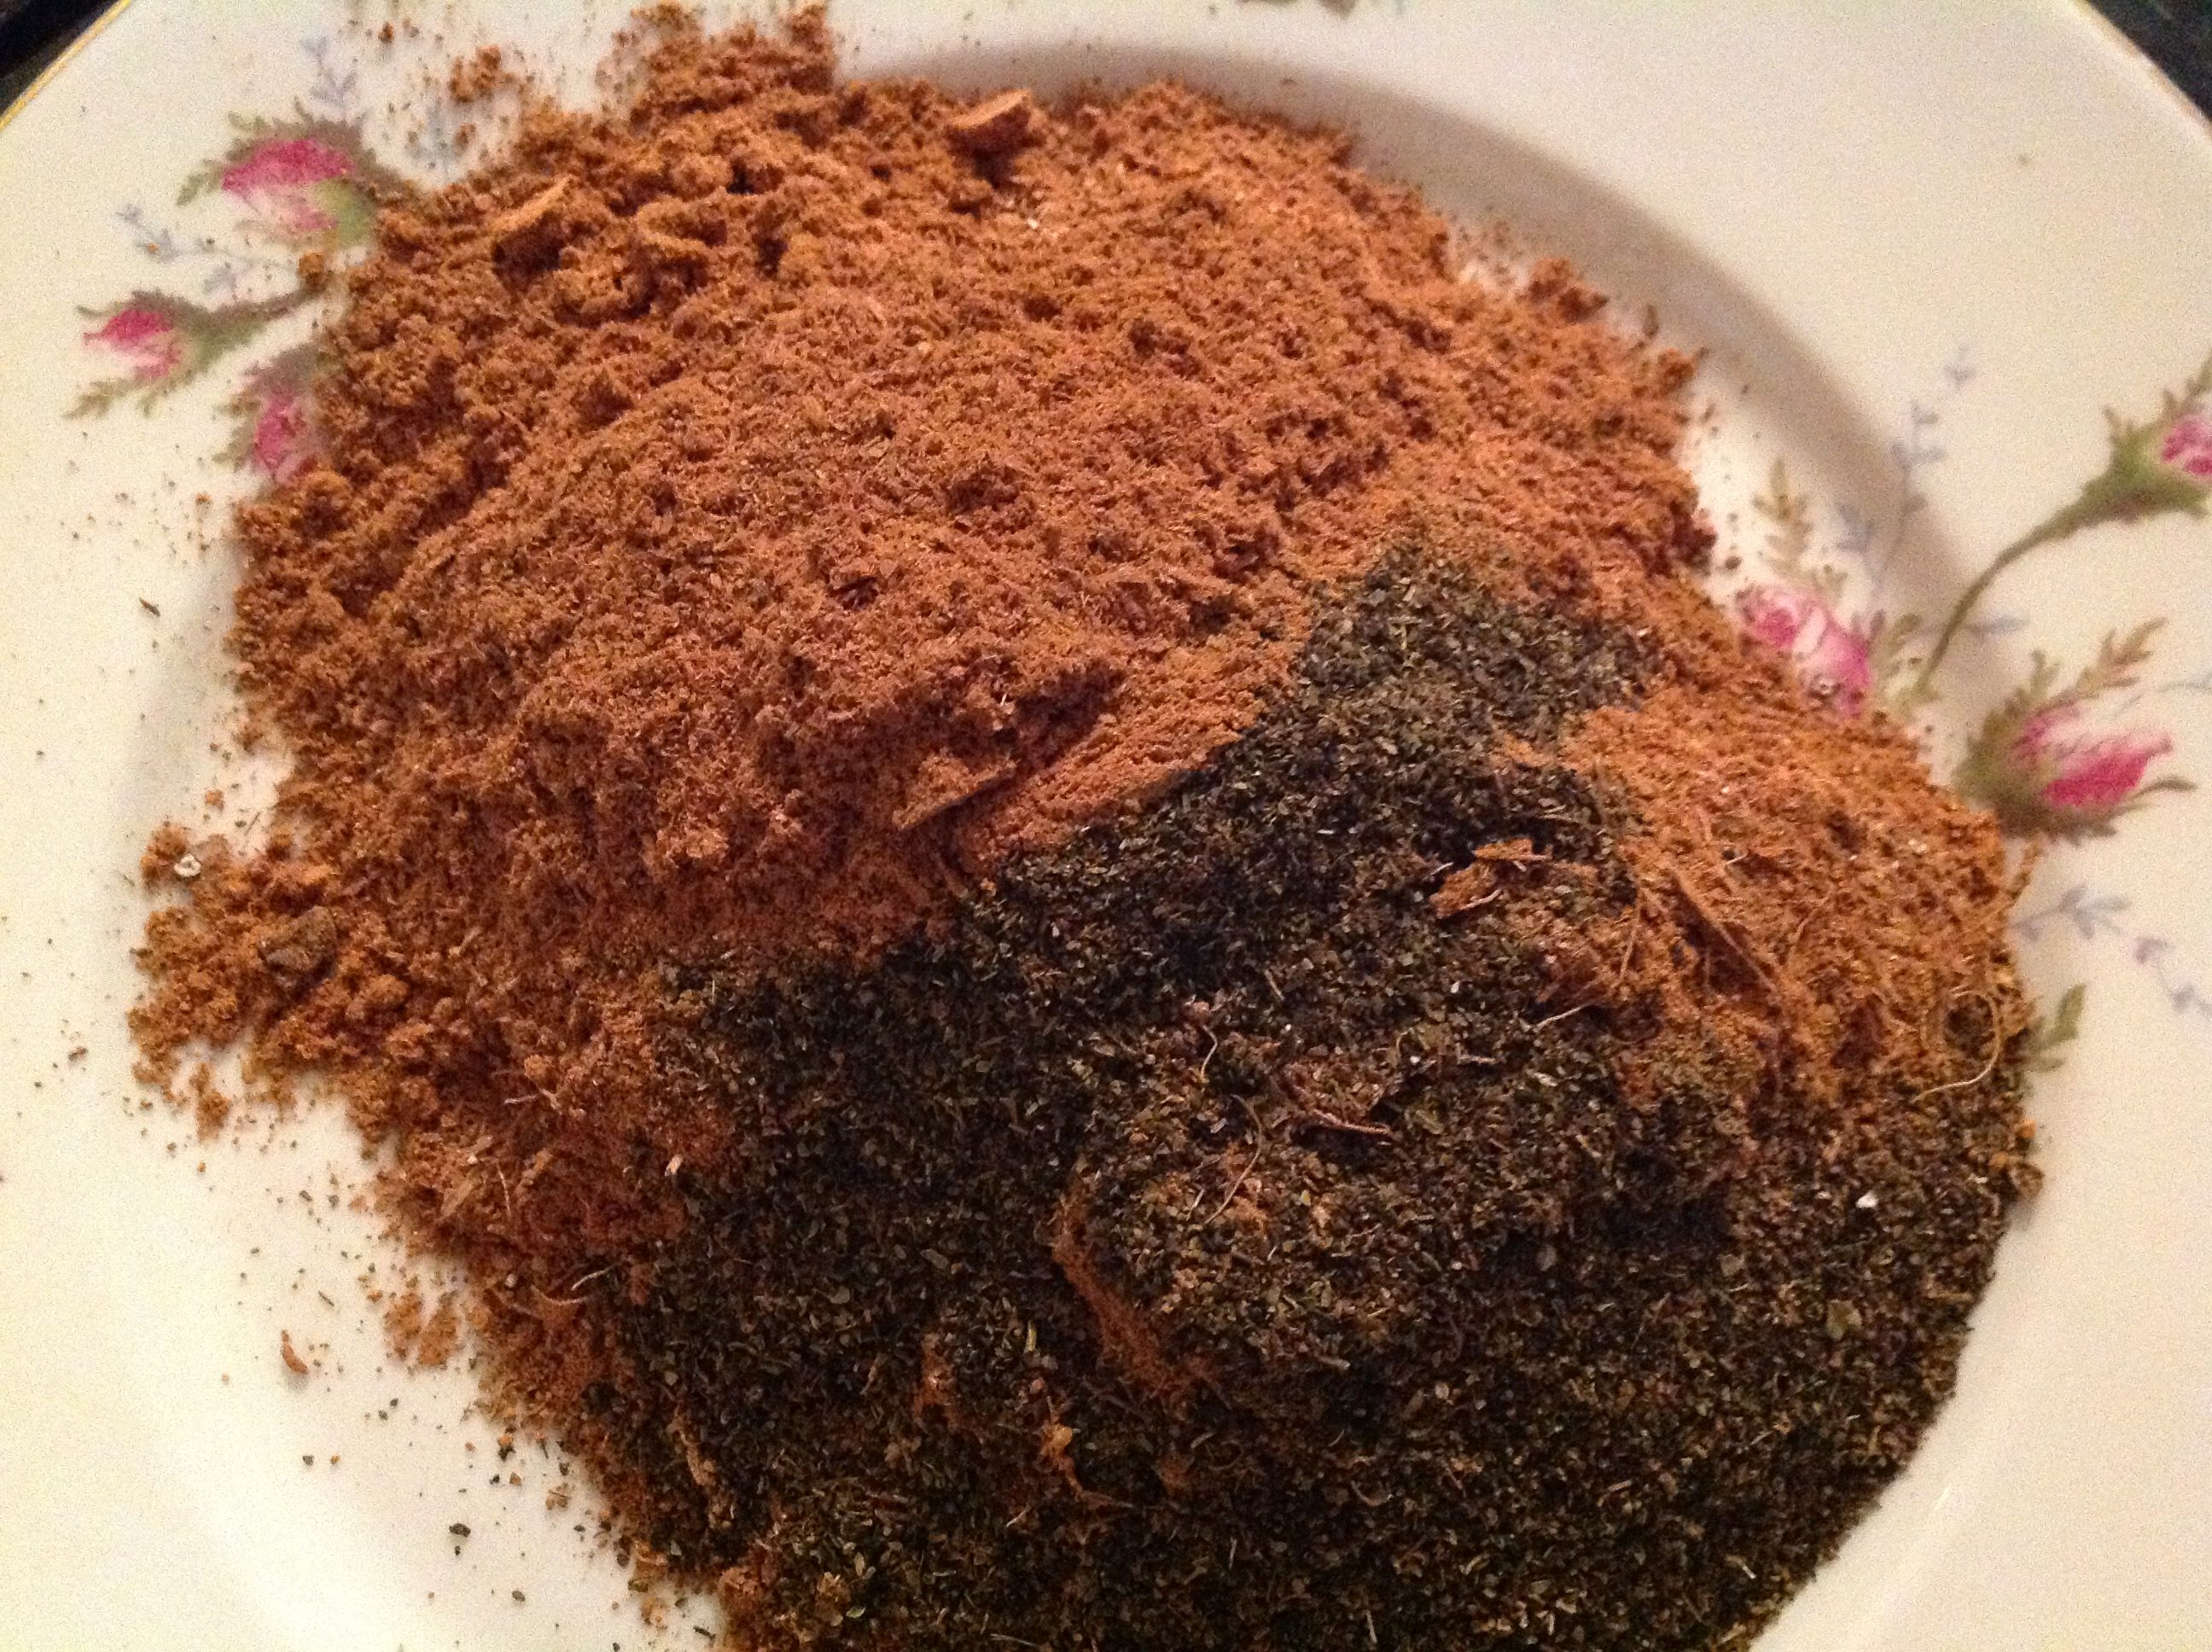 IMG_3201 spices for tea.jpg